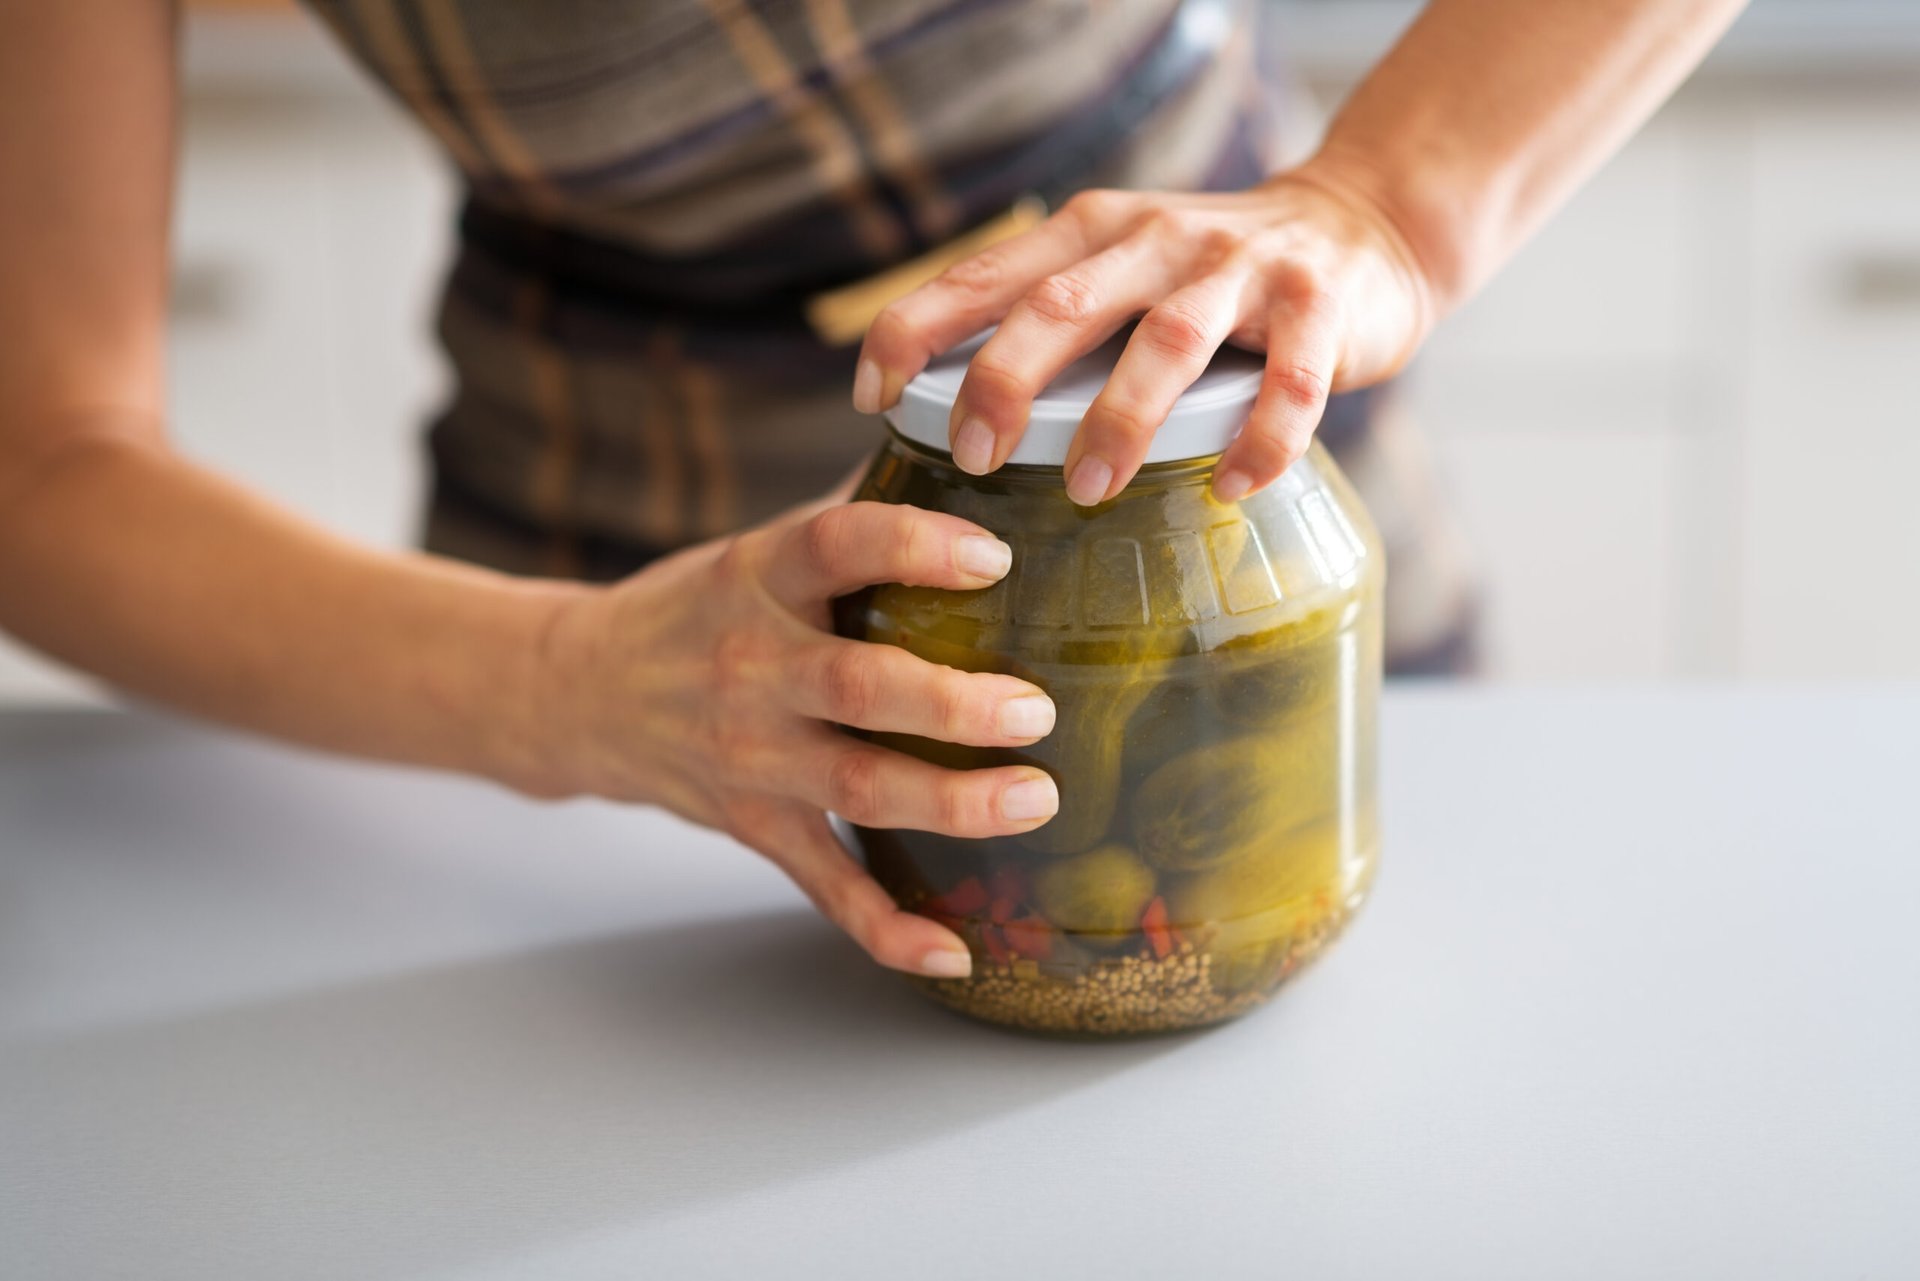 Woman opening a jar